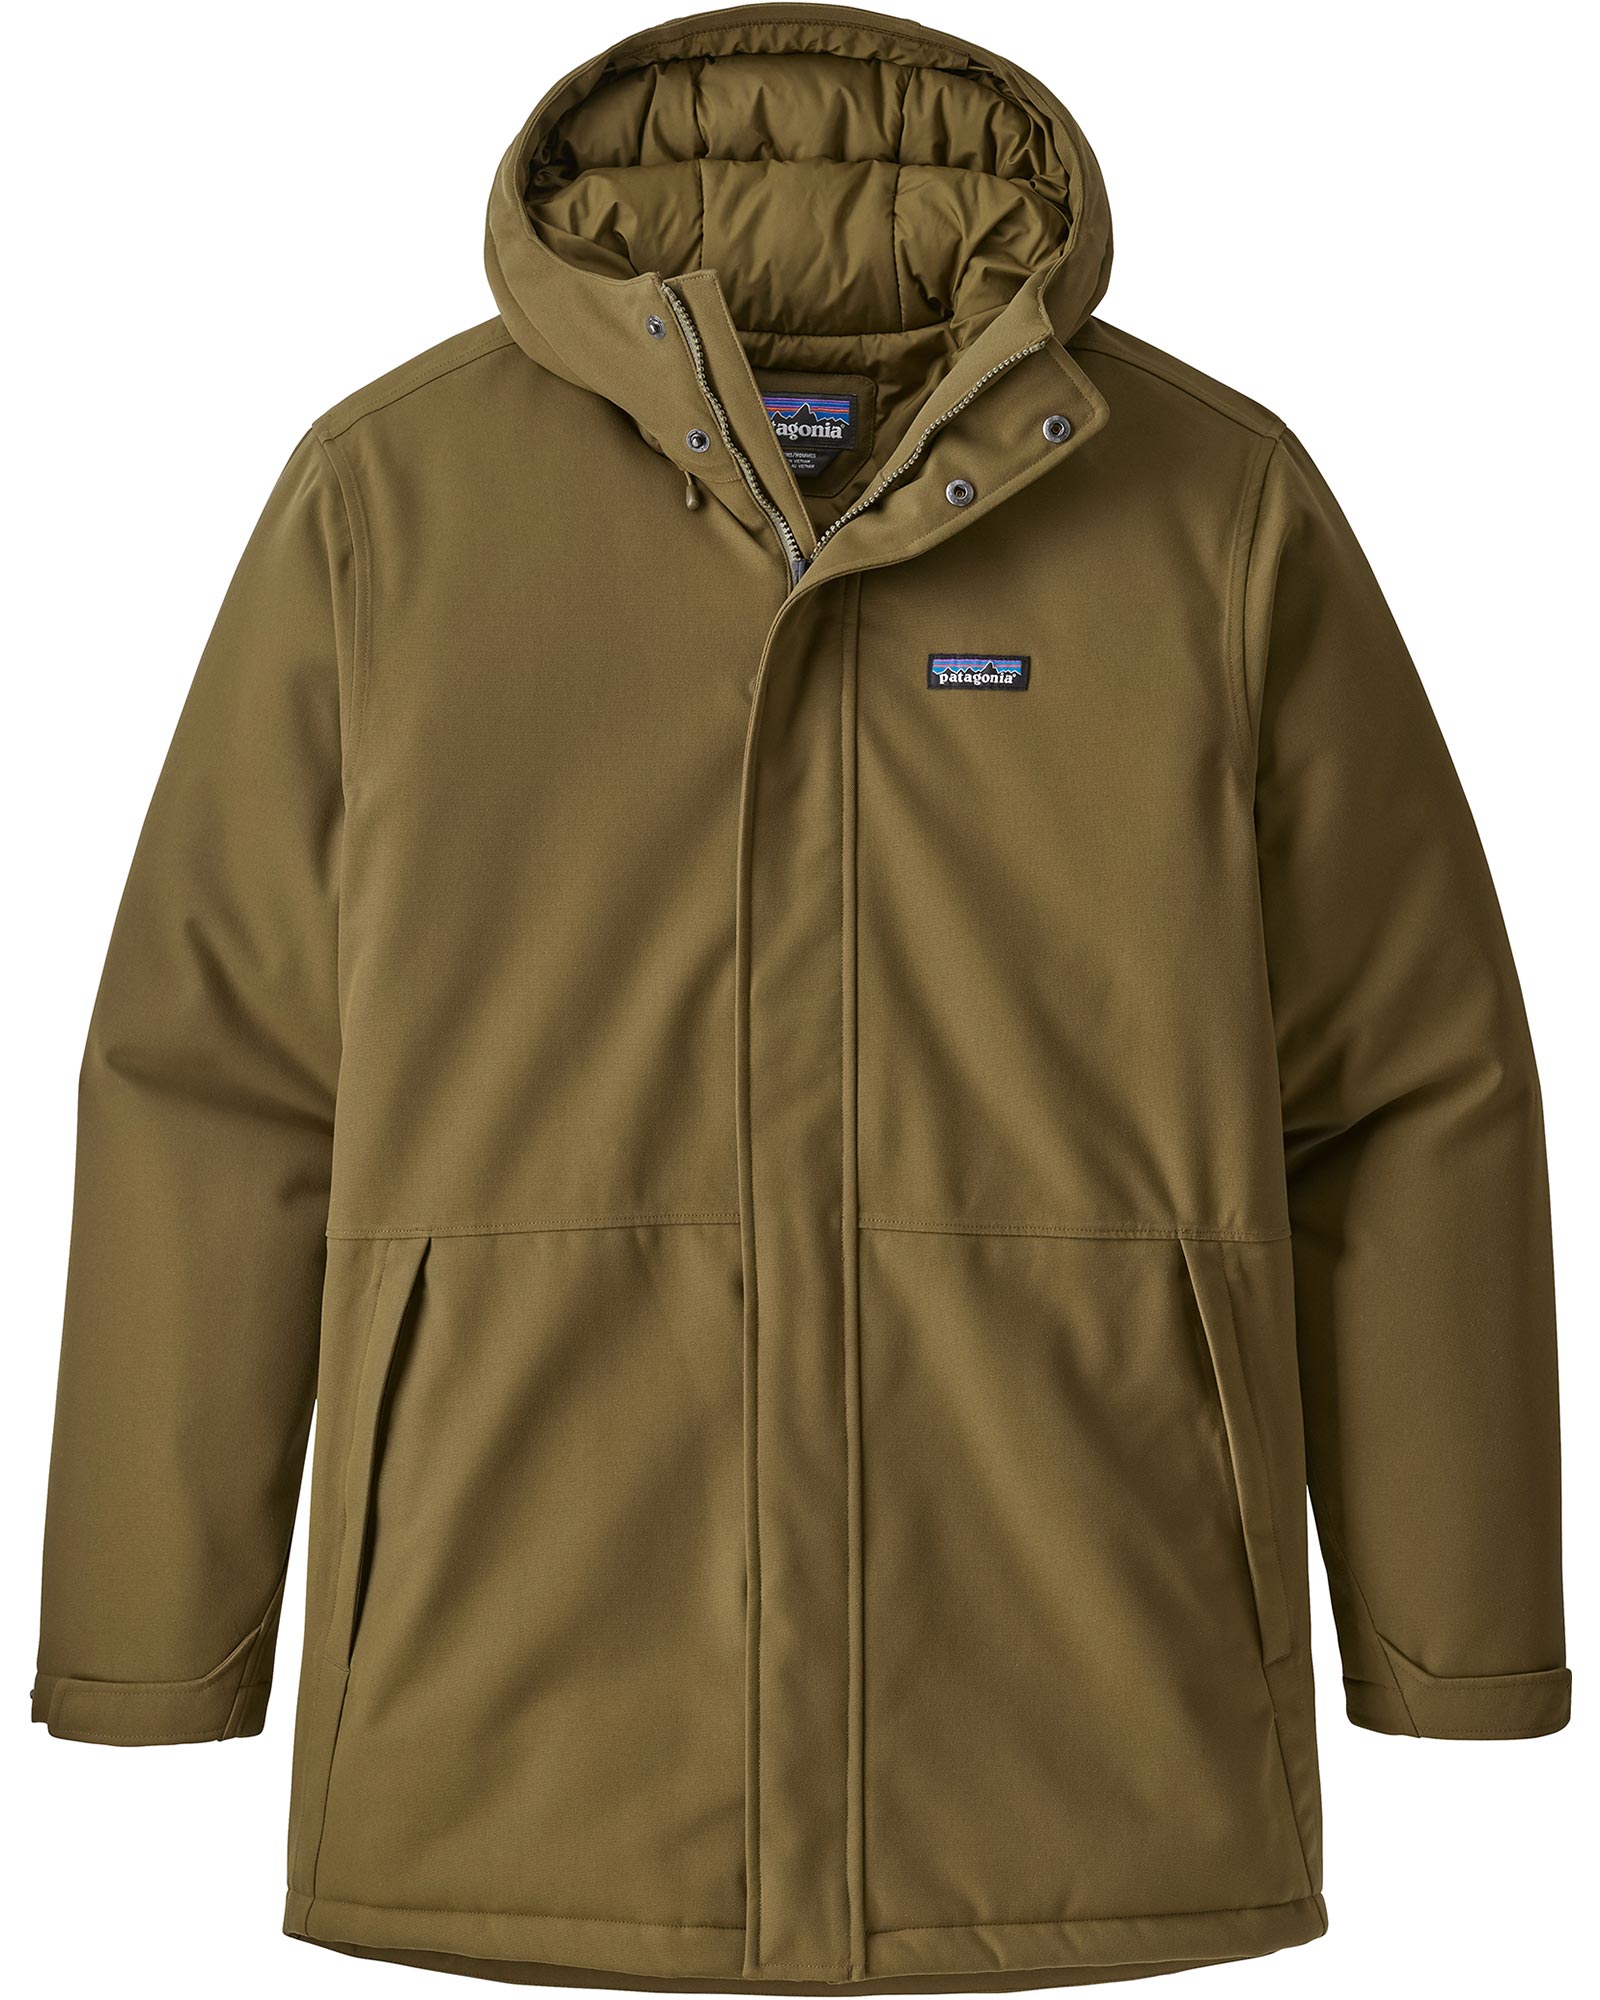 Patagonia Lone Mountain Men’s Parka Jacket - Sage Khaki XL